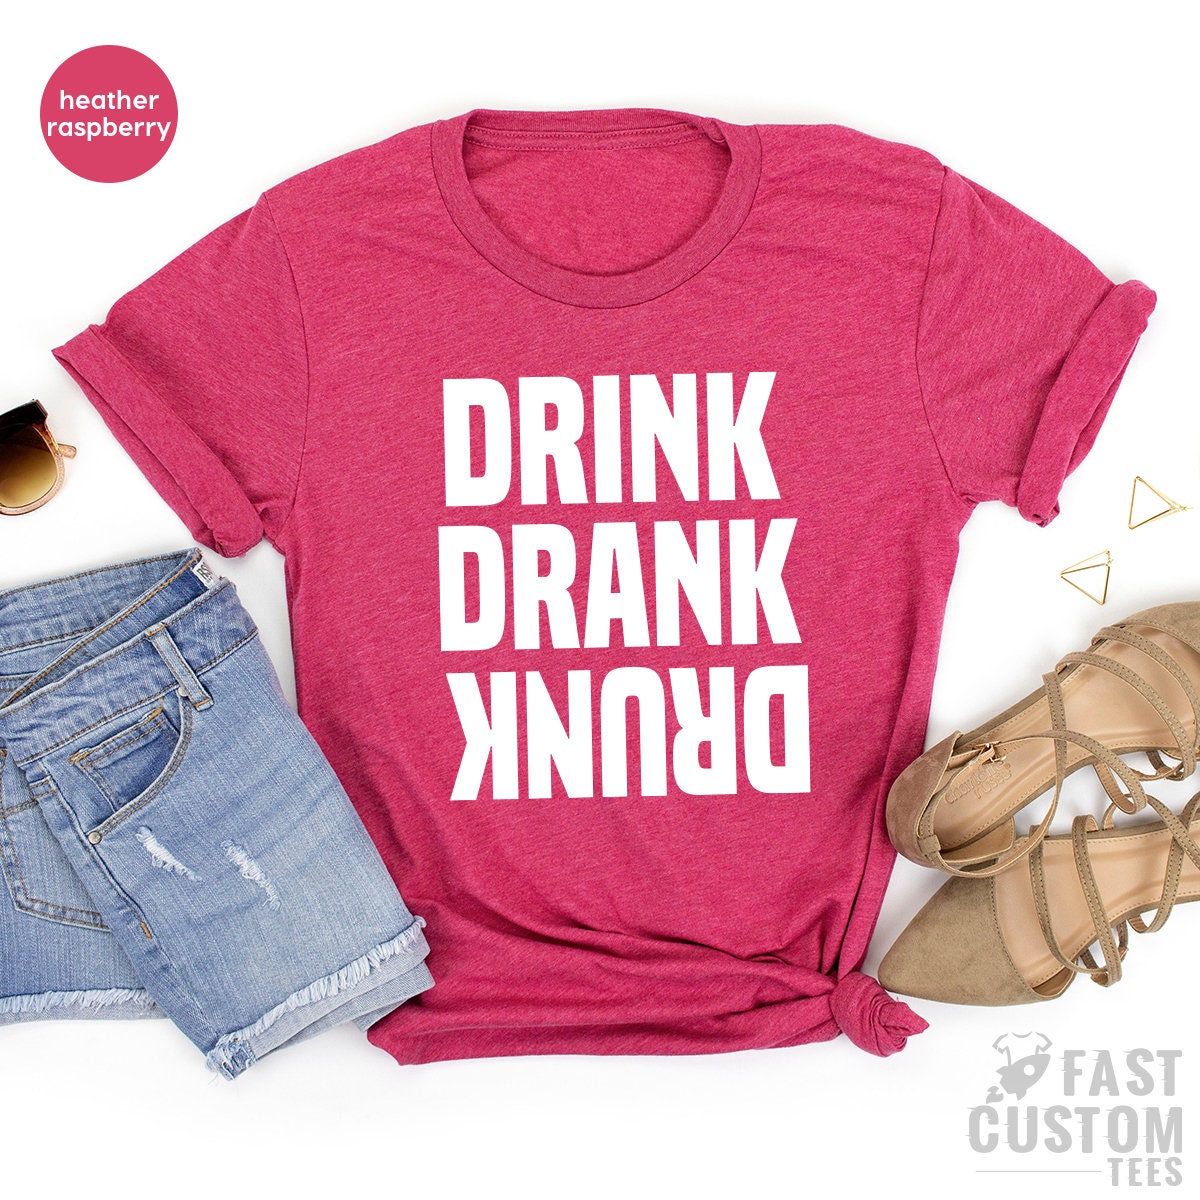 Drinking Shirt, Funny Drunk Shirt,  Drink Drank Drunk Shirt, Girls Weekend Shirt, Day Drinking Shirt, Bachelorette Party Shirt, Besties Tee - Fastdeliverytees.com